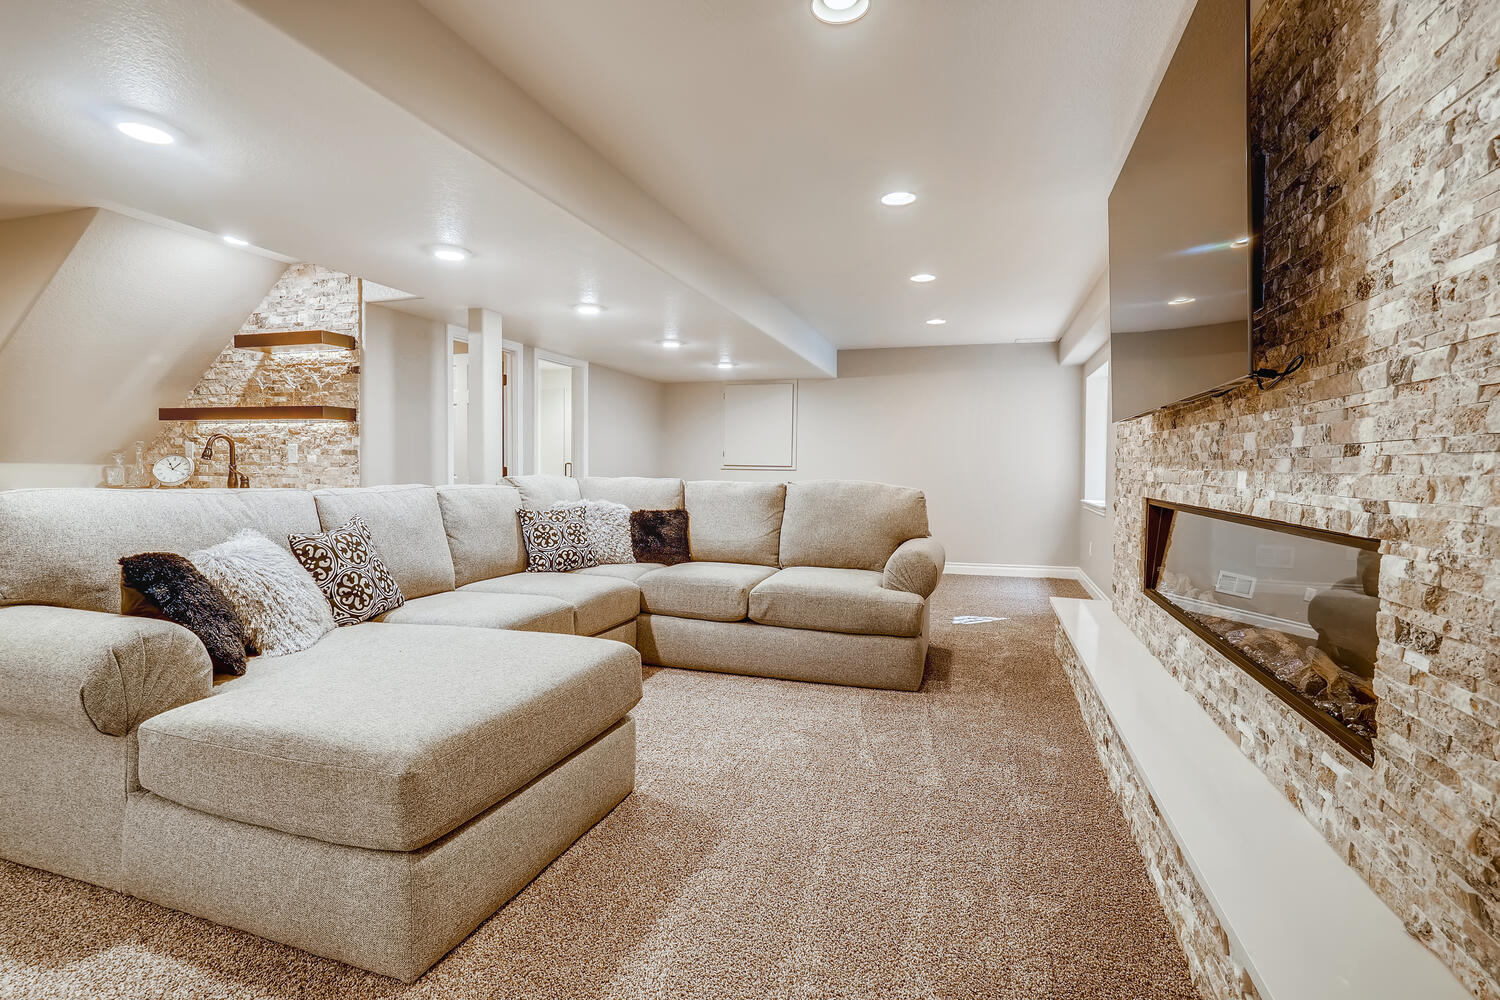 7 Inspiring Basement Living Room Designs - Finished Basements and More